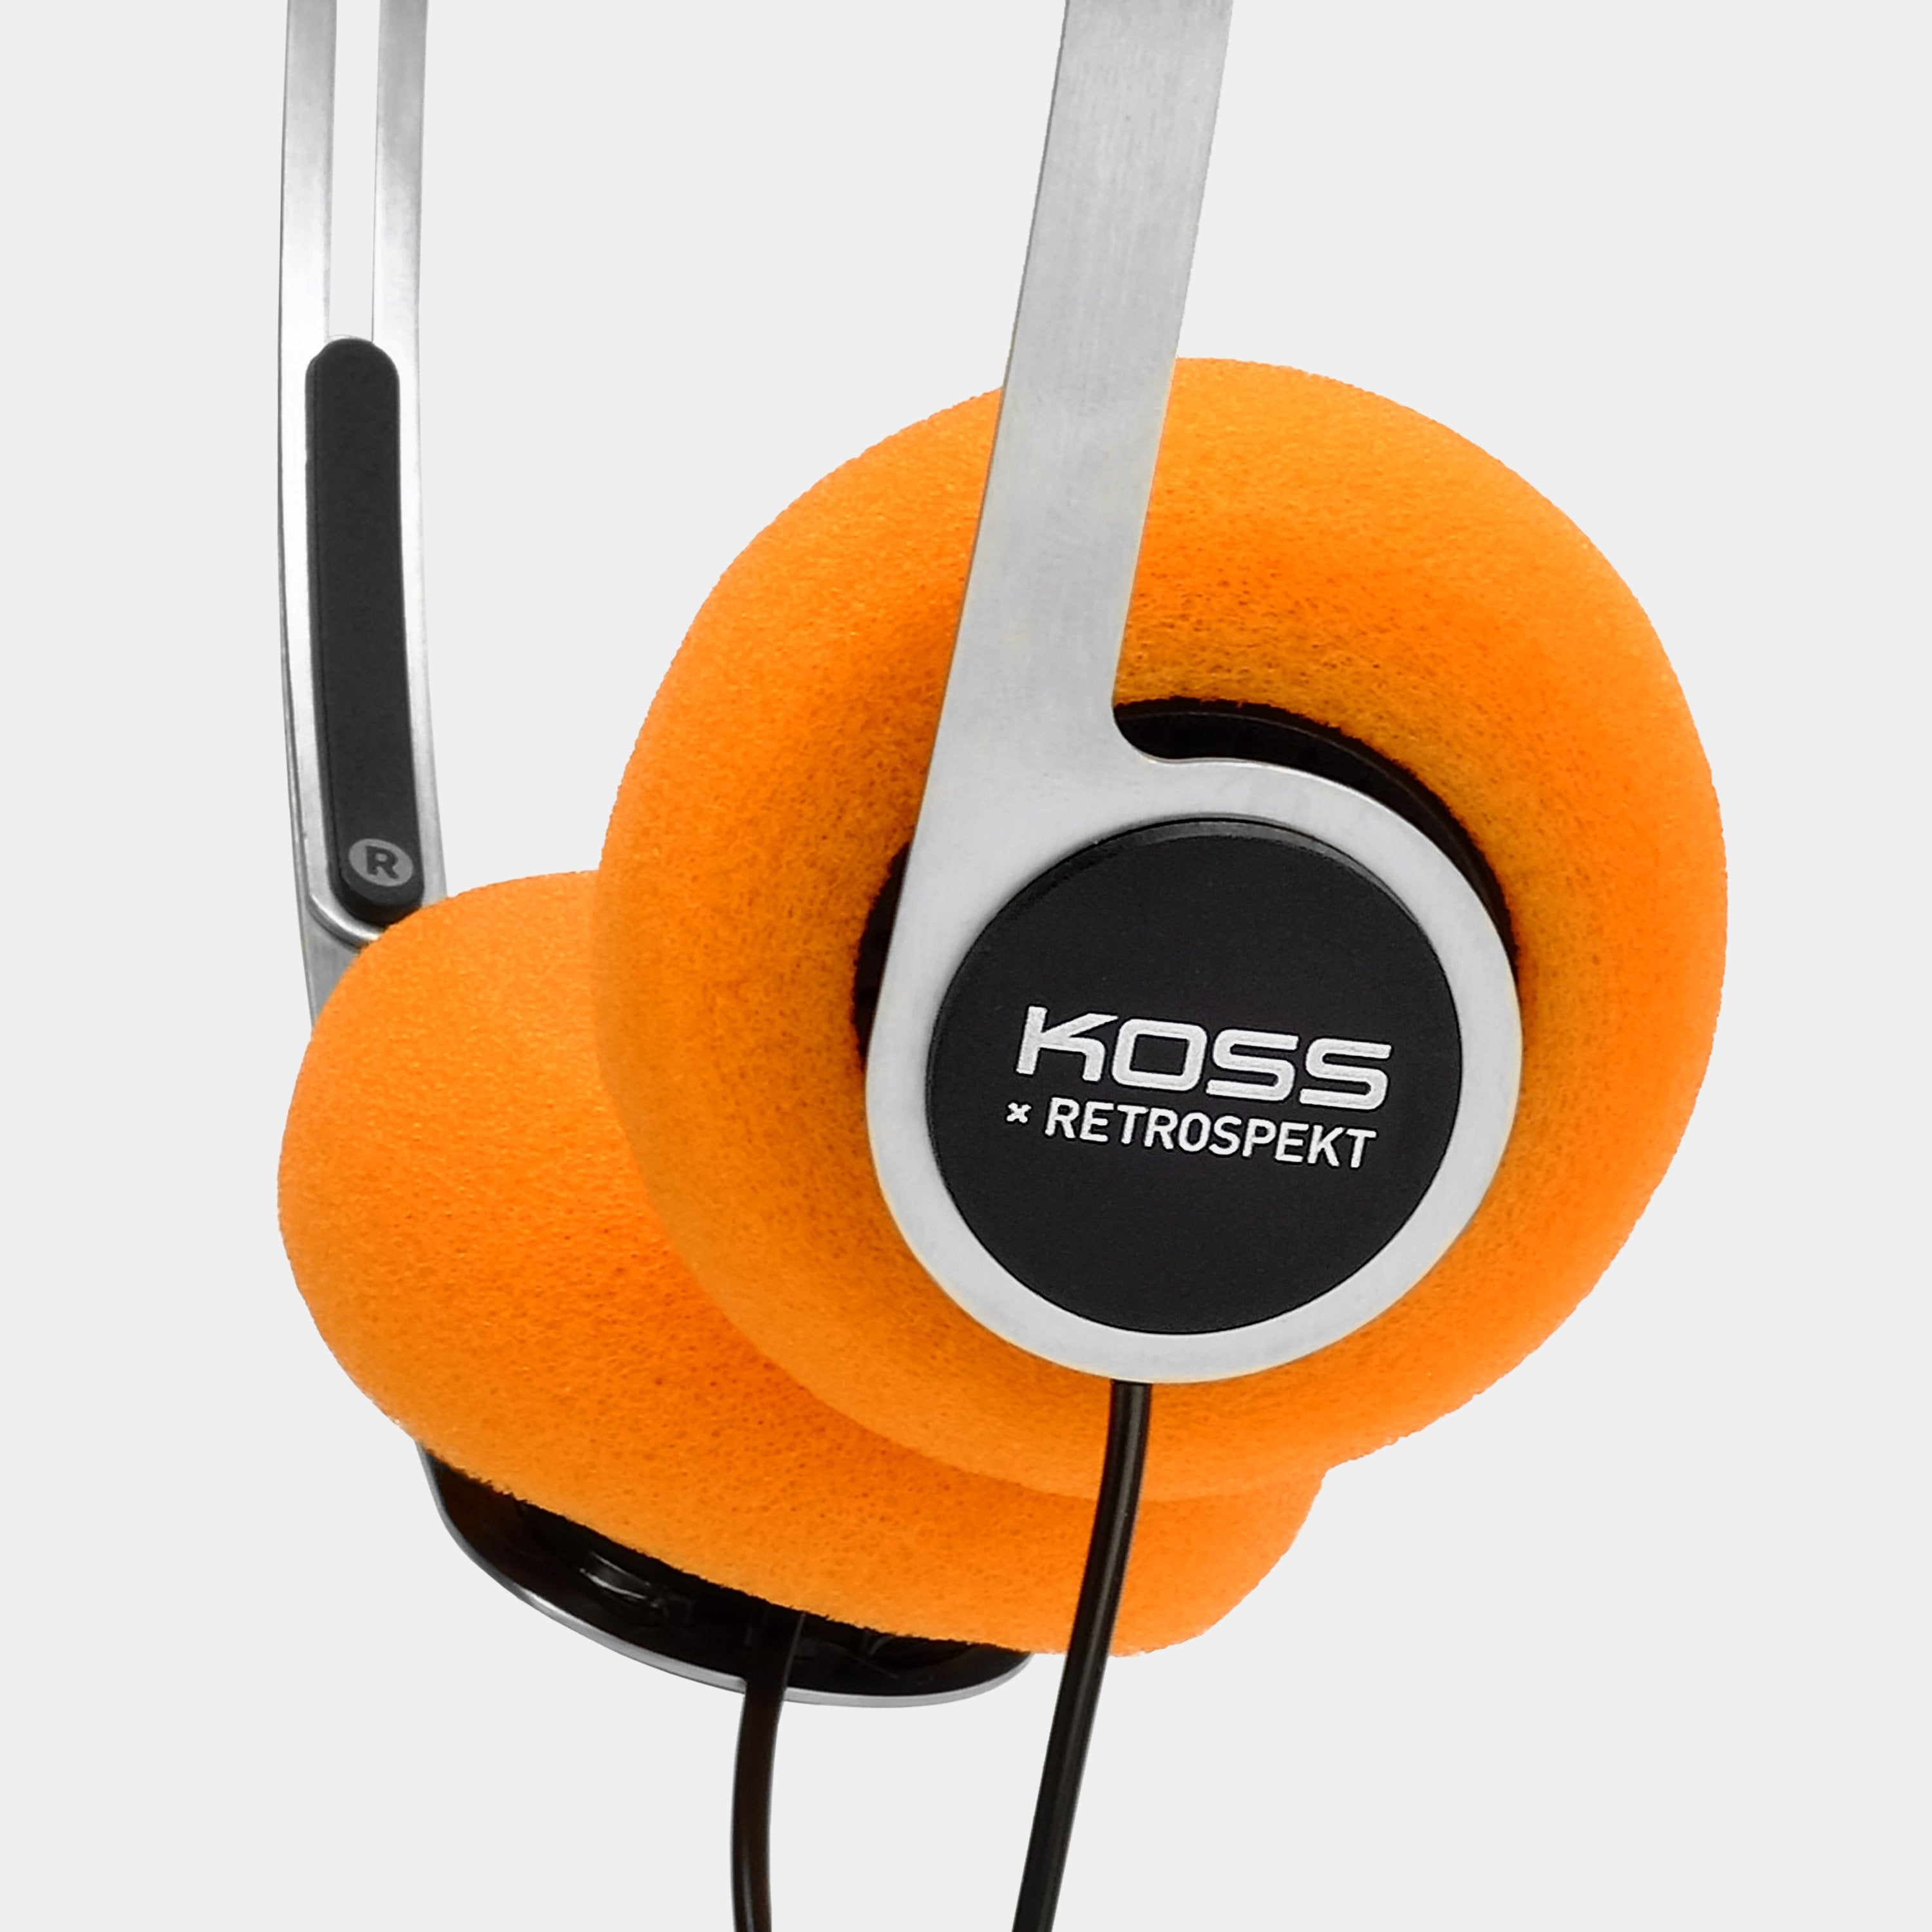 Koss x Retrospekt p/21 Headphones